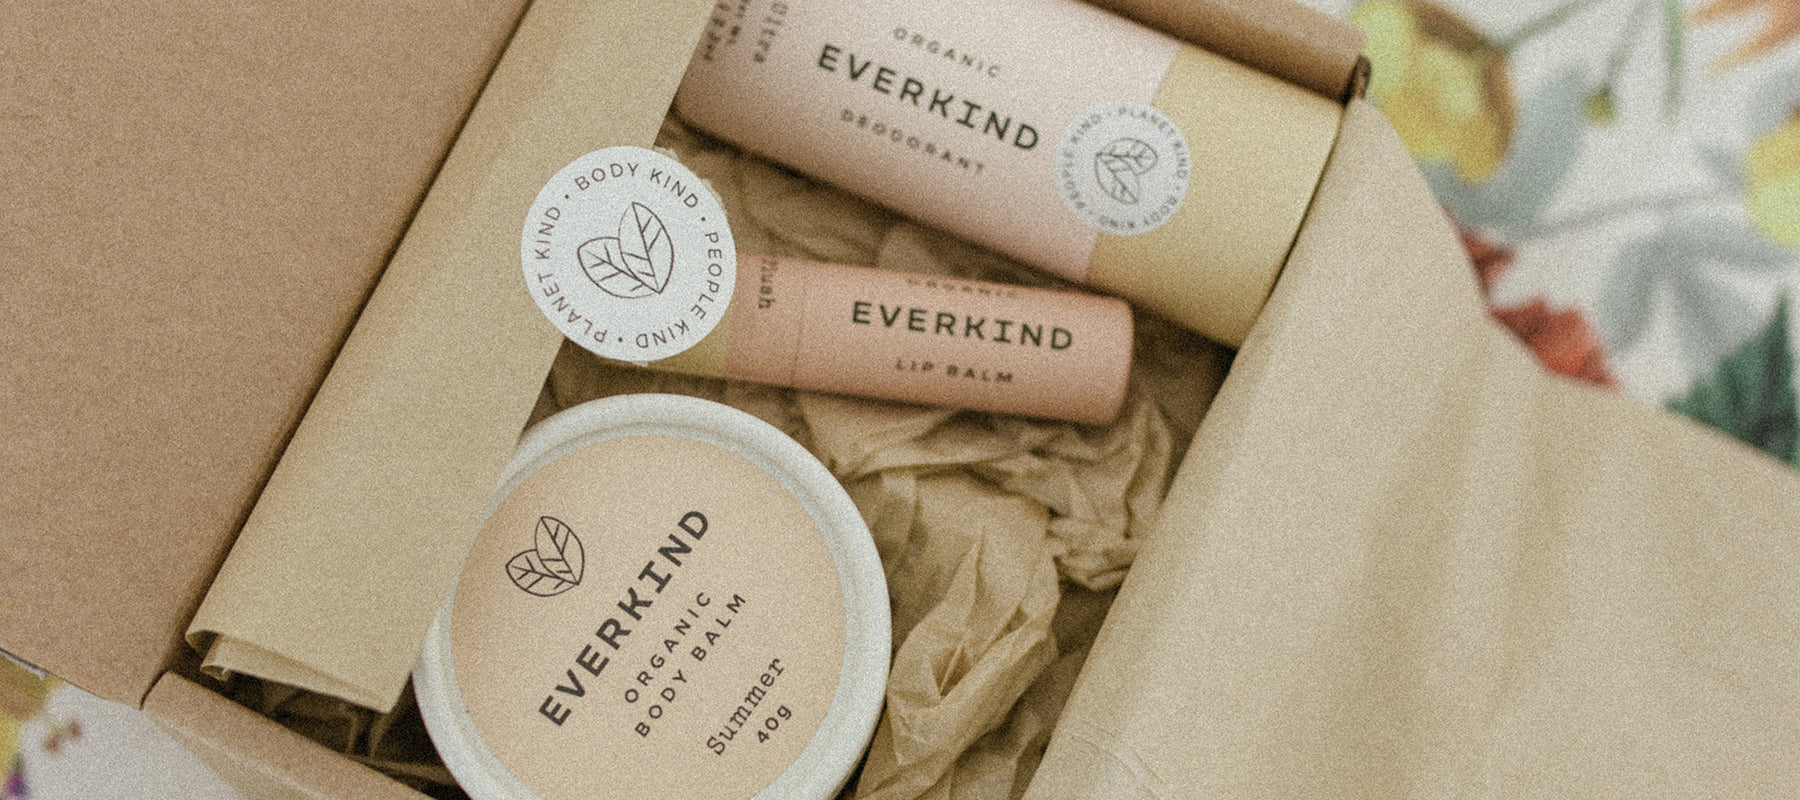 Everkind natural skincare gift bundle bursting with organic goodness.